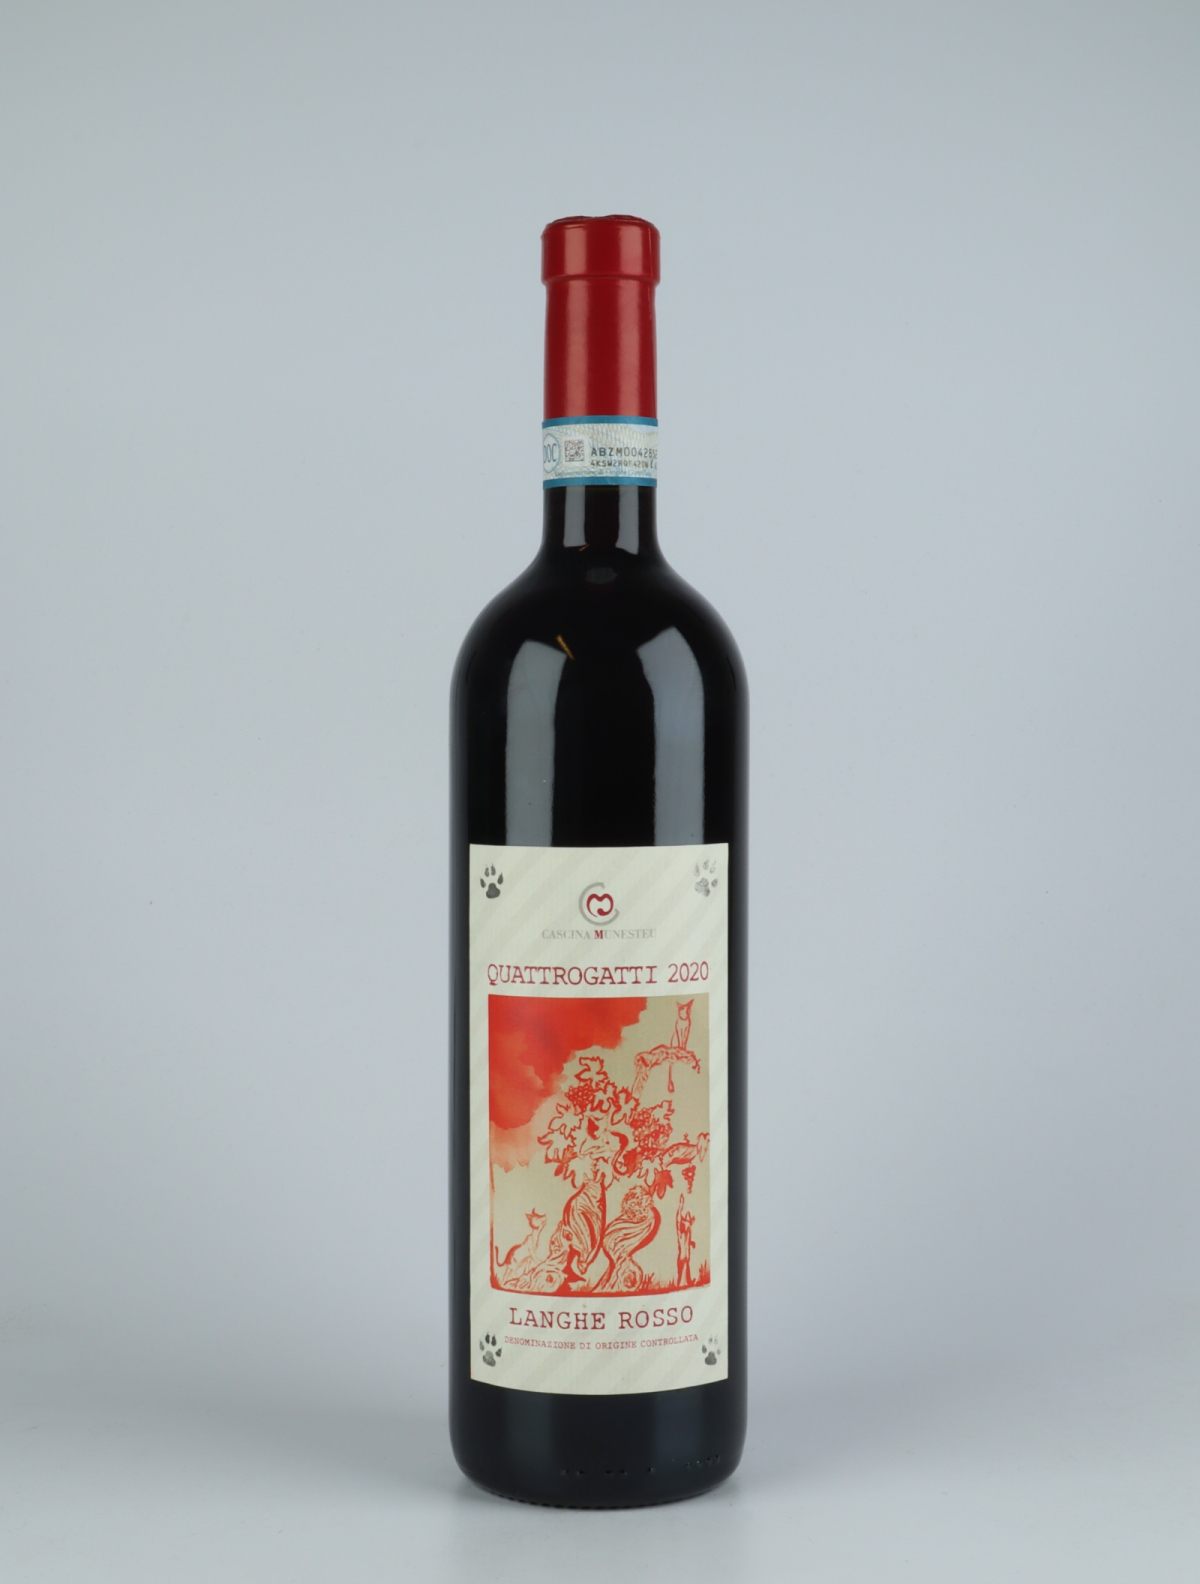 En flaske 2020 Langhe Rosso - Quattrogatti Rødvin fra Cascina Munesteu, Piemonte i Italien